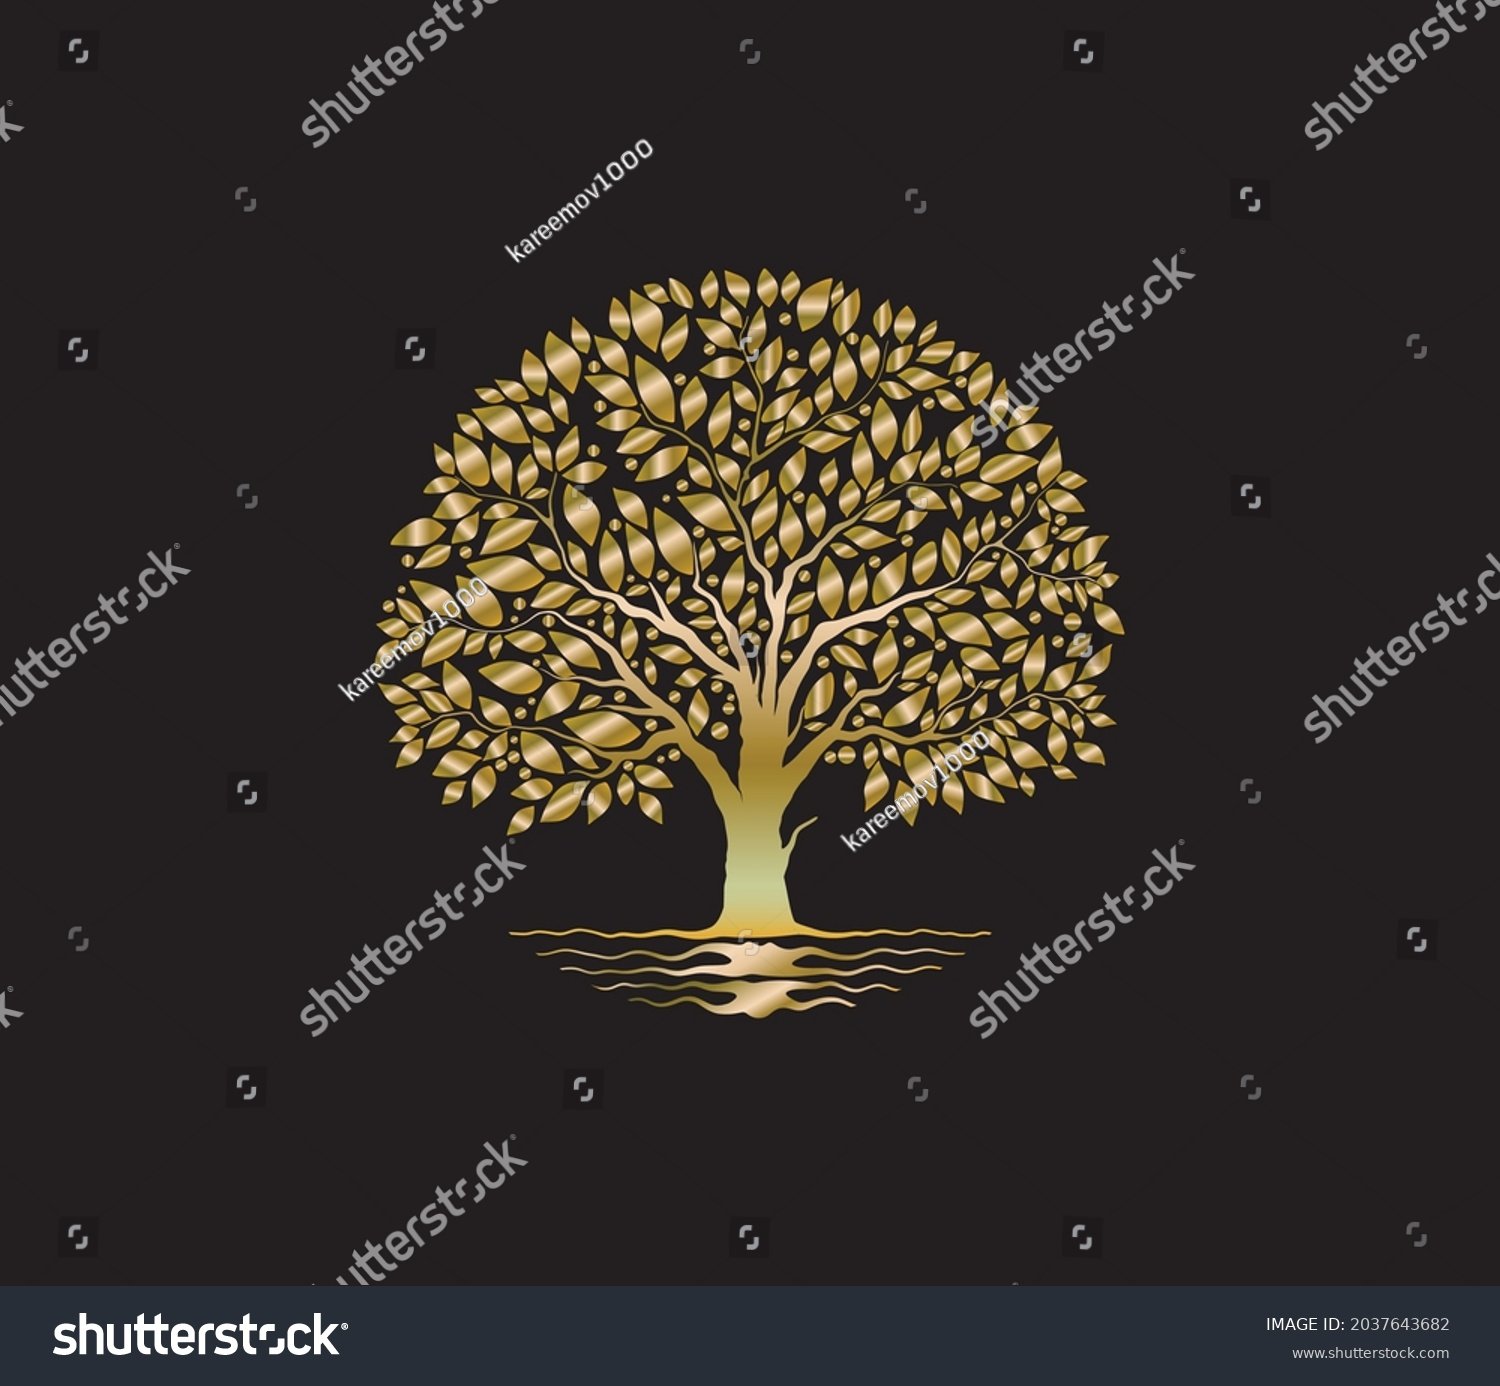 stock-vector-golden-tree-logo-with-circular-shape-2037643682.jpg